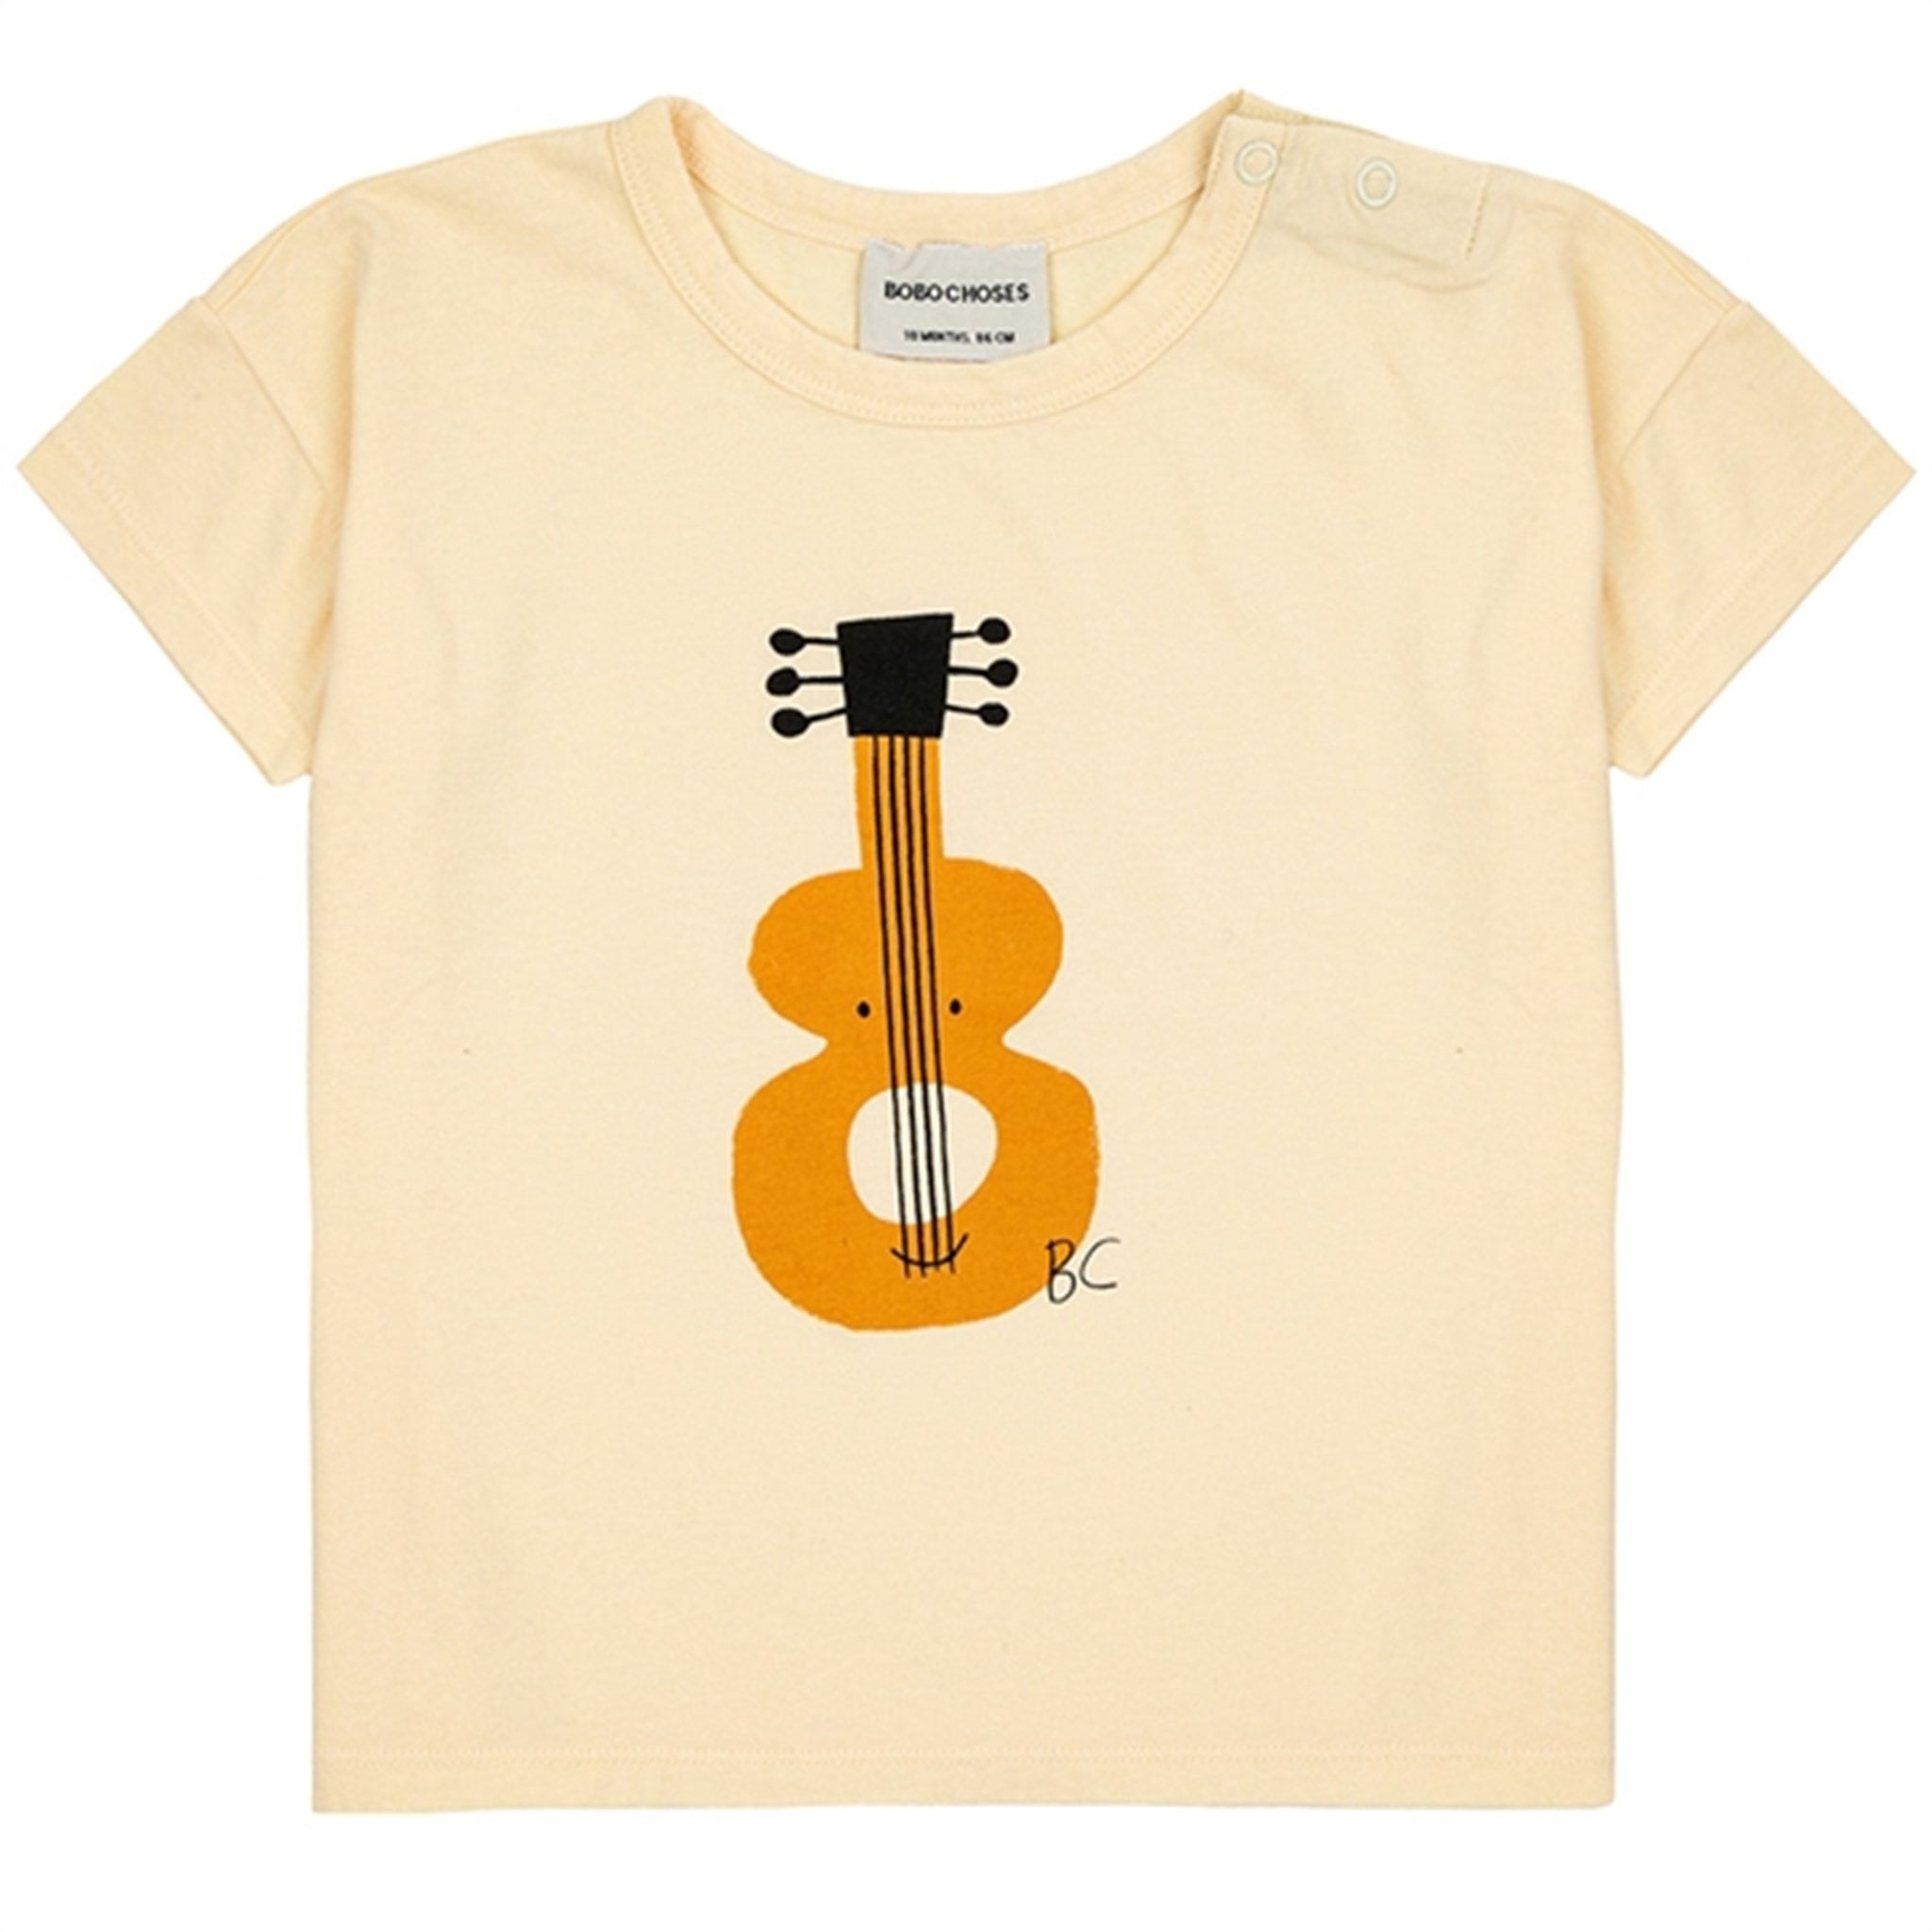 Bobo Choses Bebis Acoustic Guitar T-Shirt Light Yellow